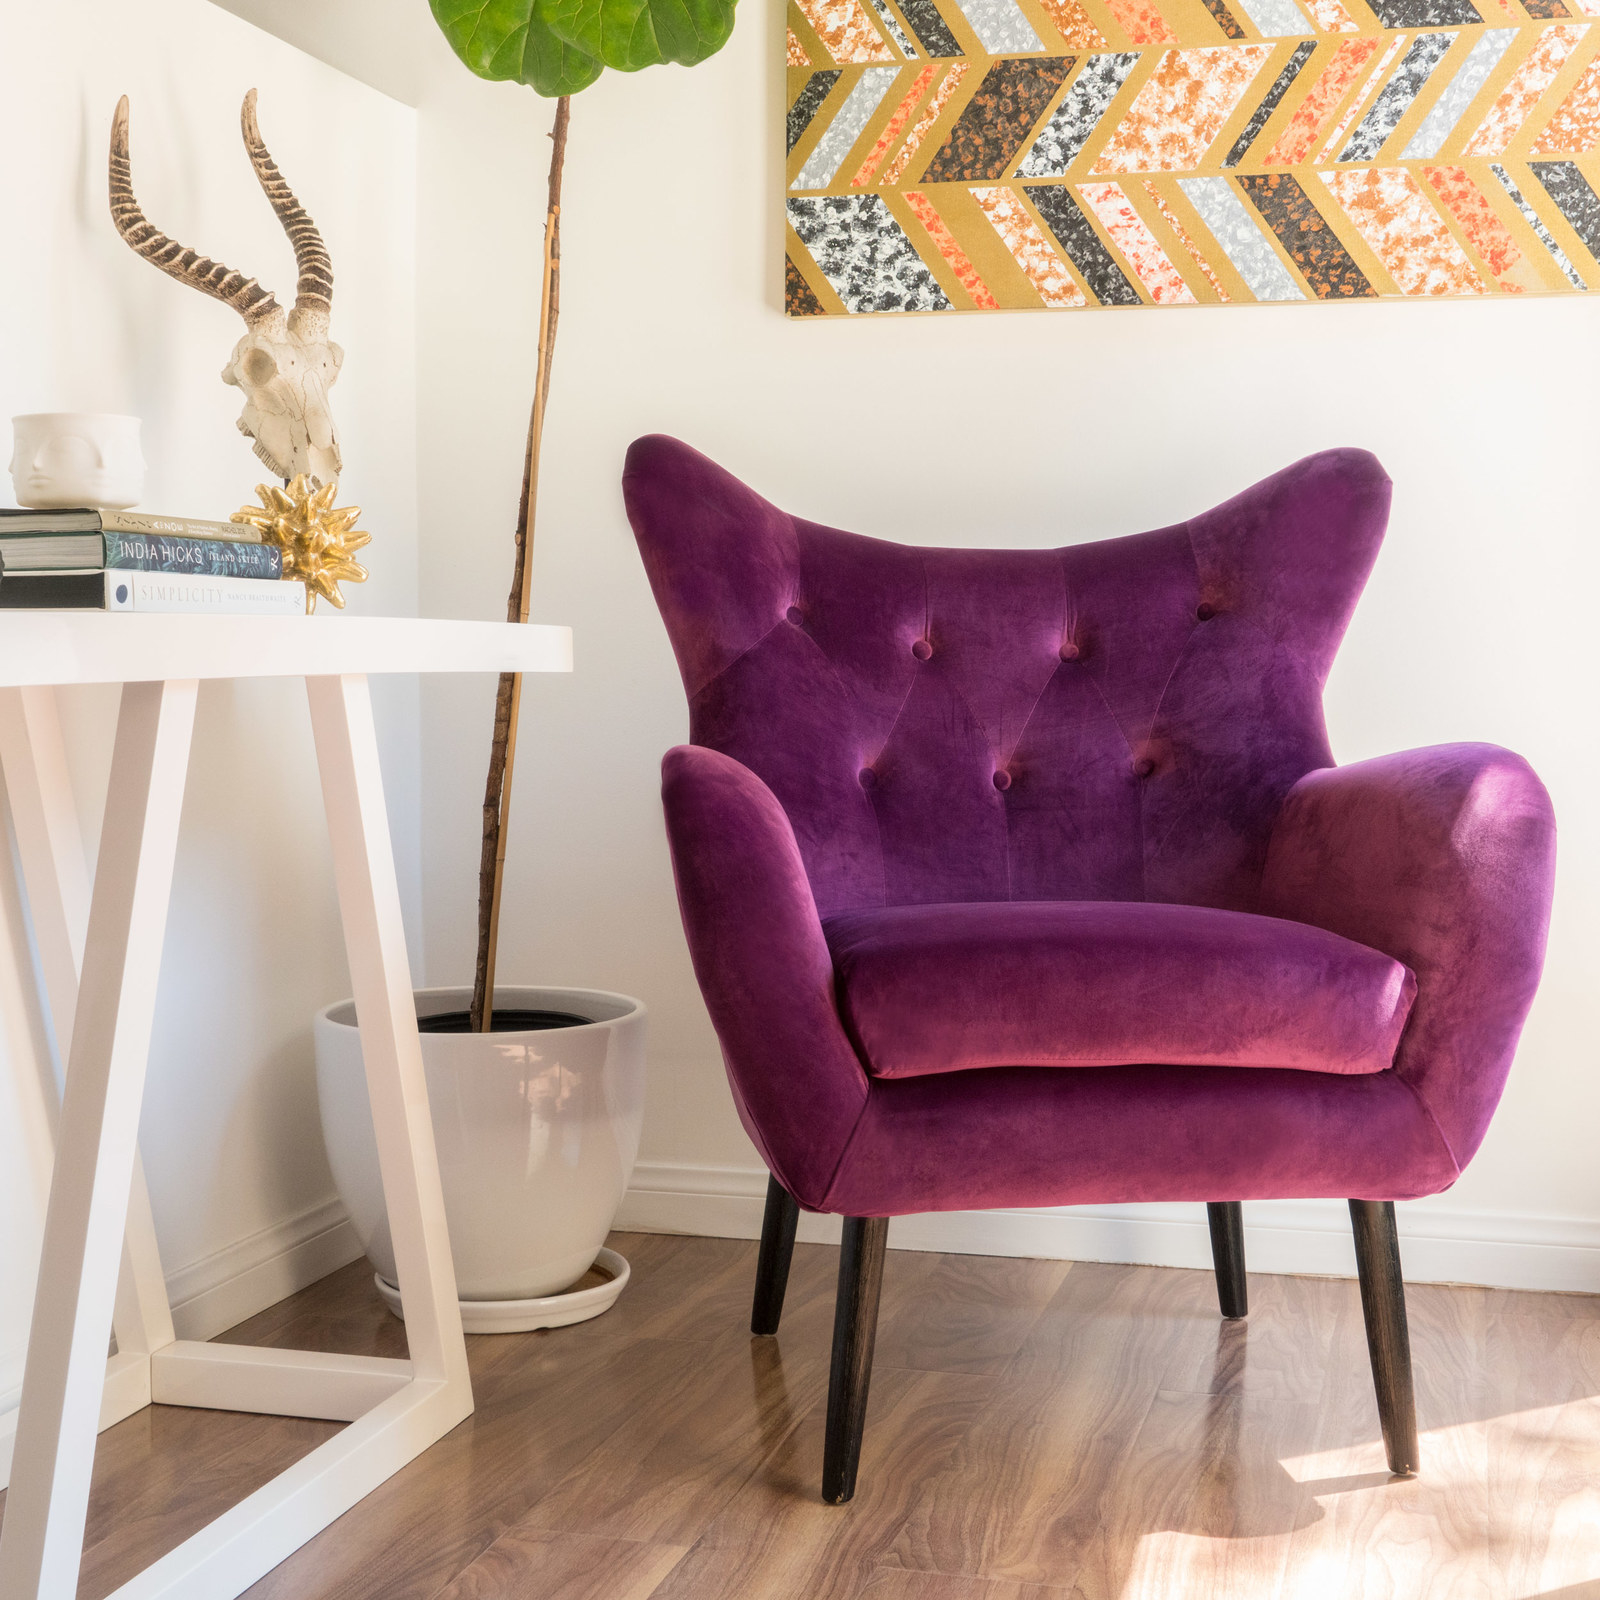 photo of butterfly velvet purple armchair in the corner of room